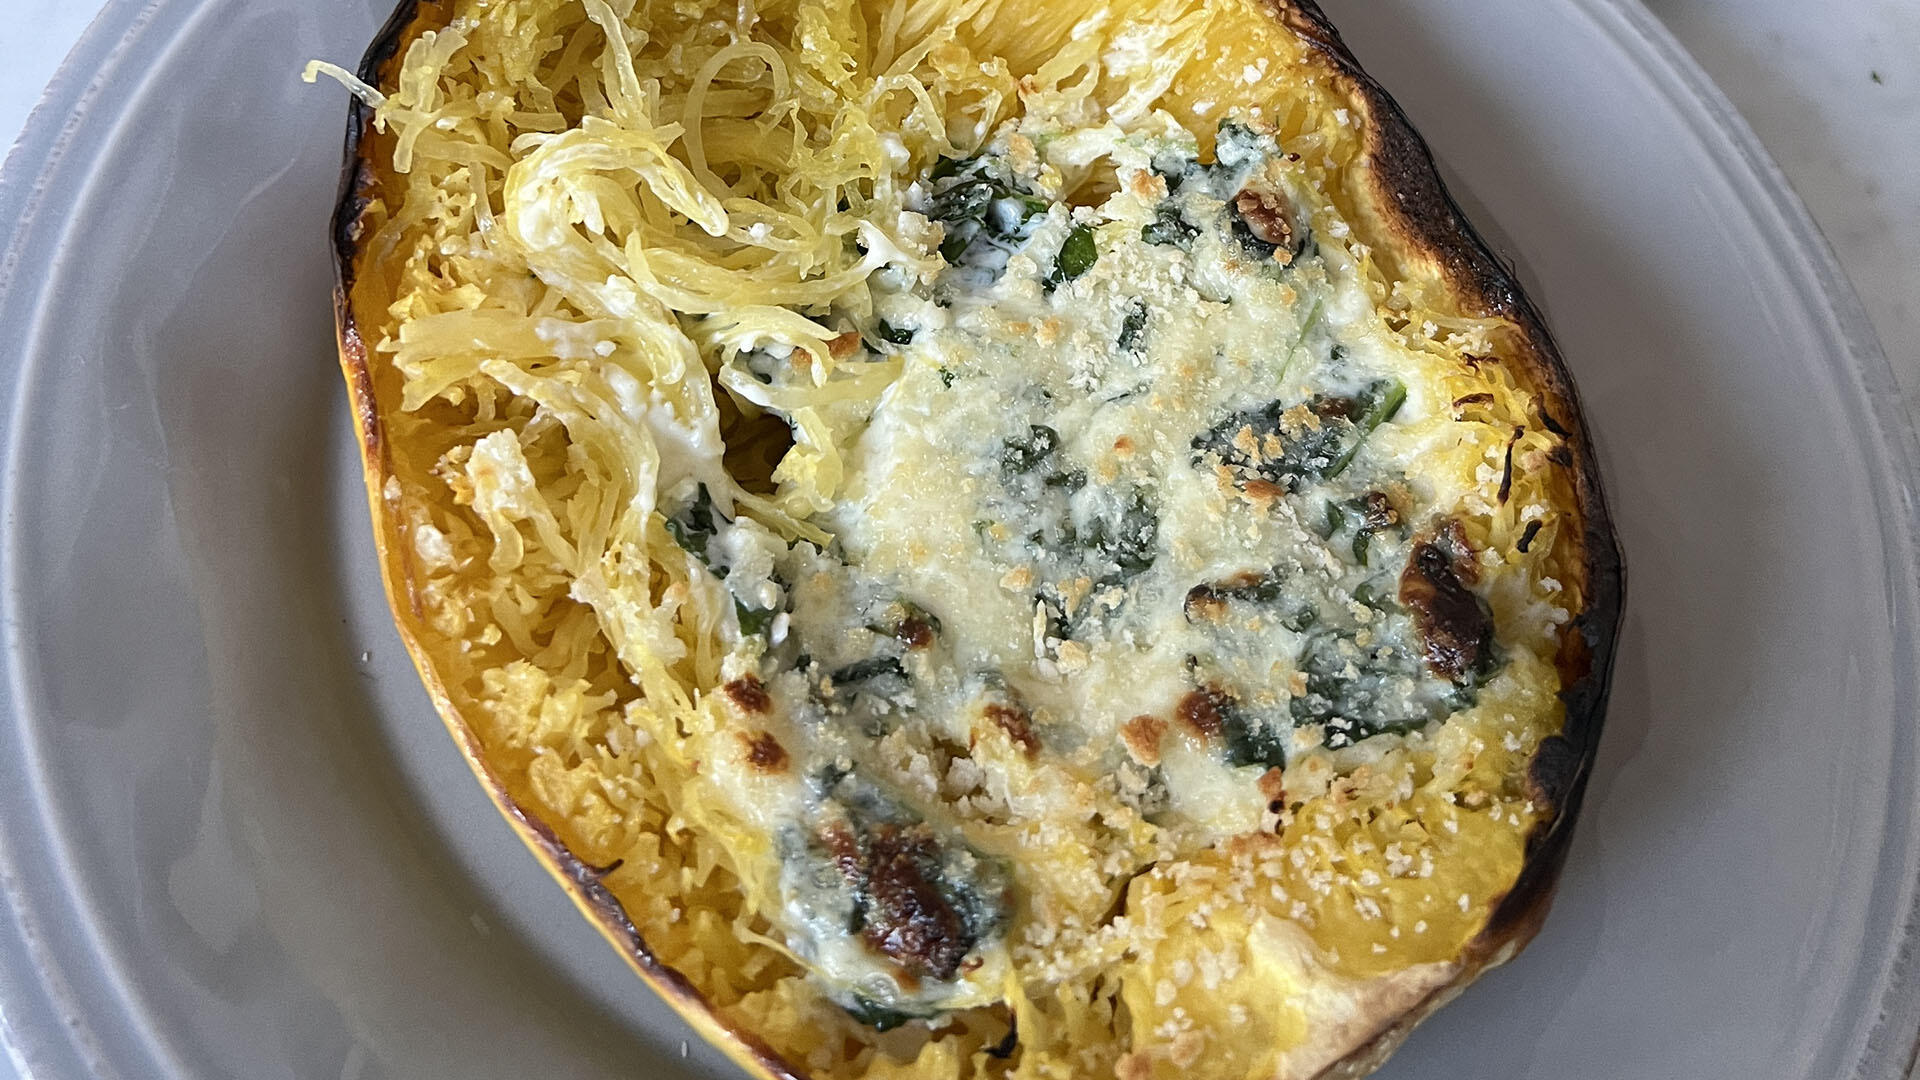 Cheesy Spaghetti Squash with Baby Kale | Recipe - Rachael Ray Show